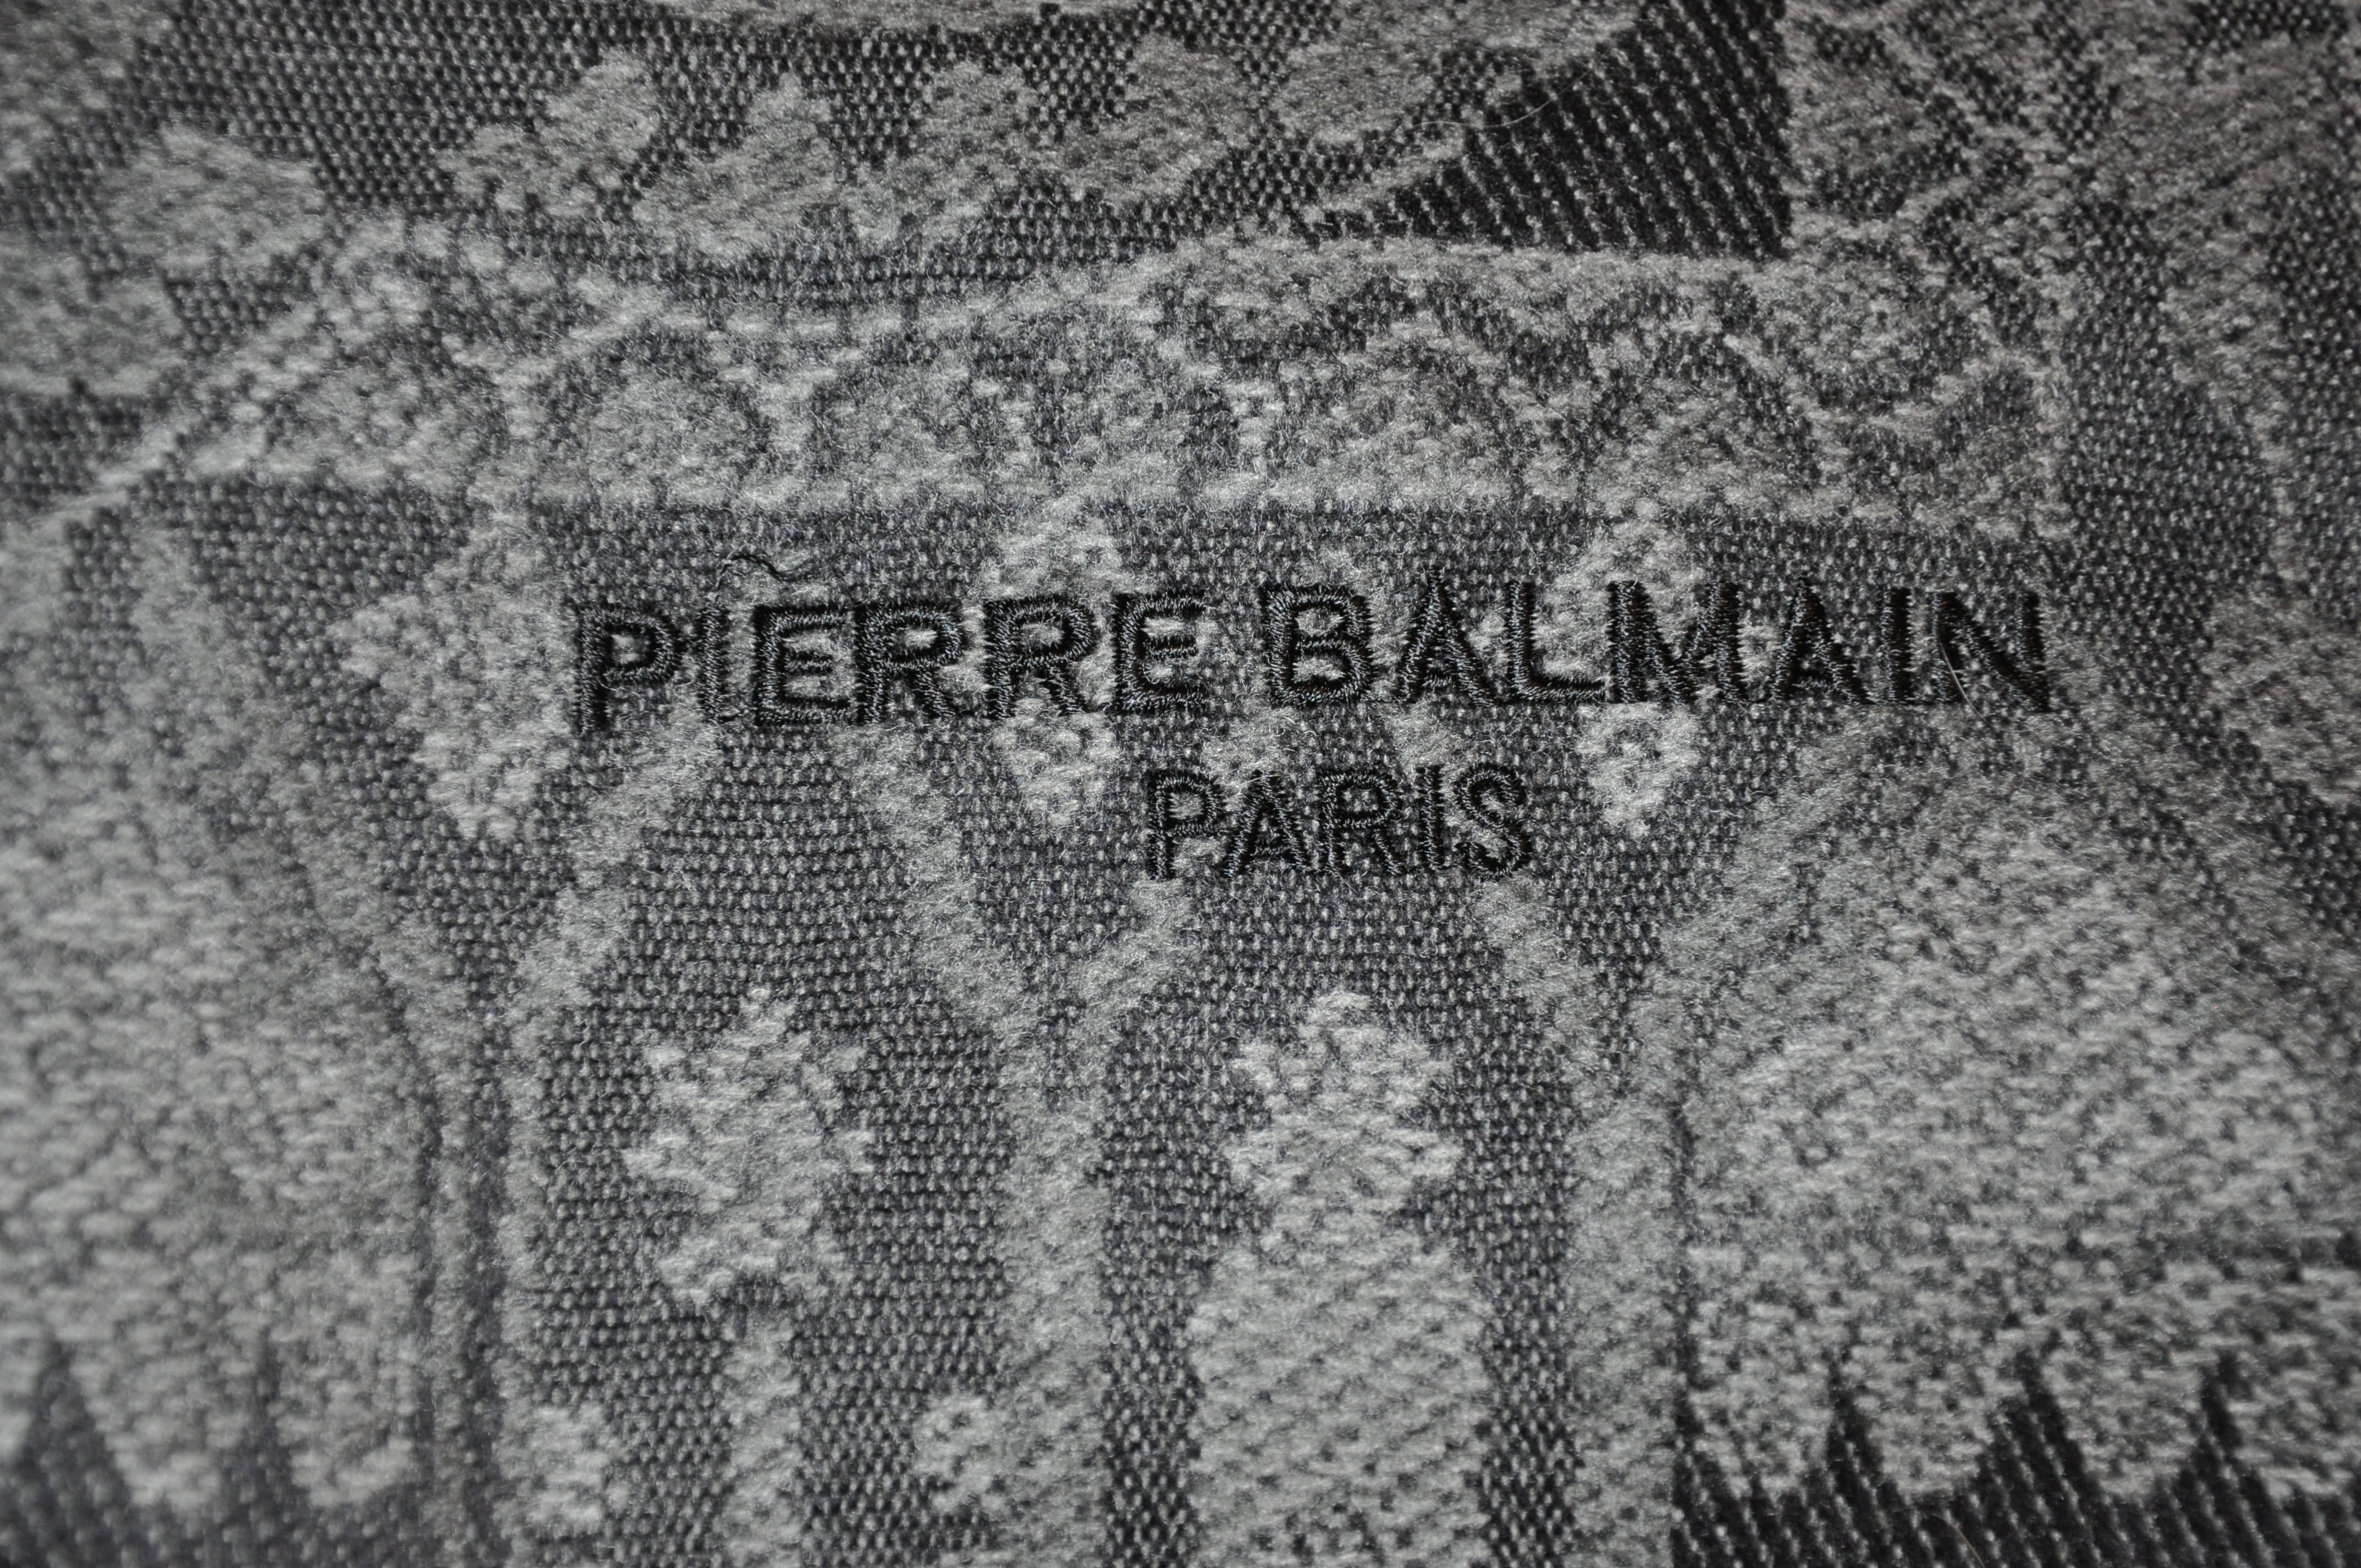        Pierre Balmain wonderful combination of merino wool and cashmere in 